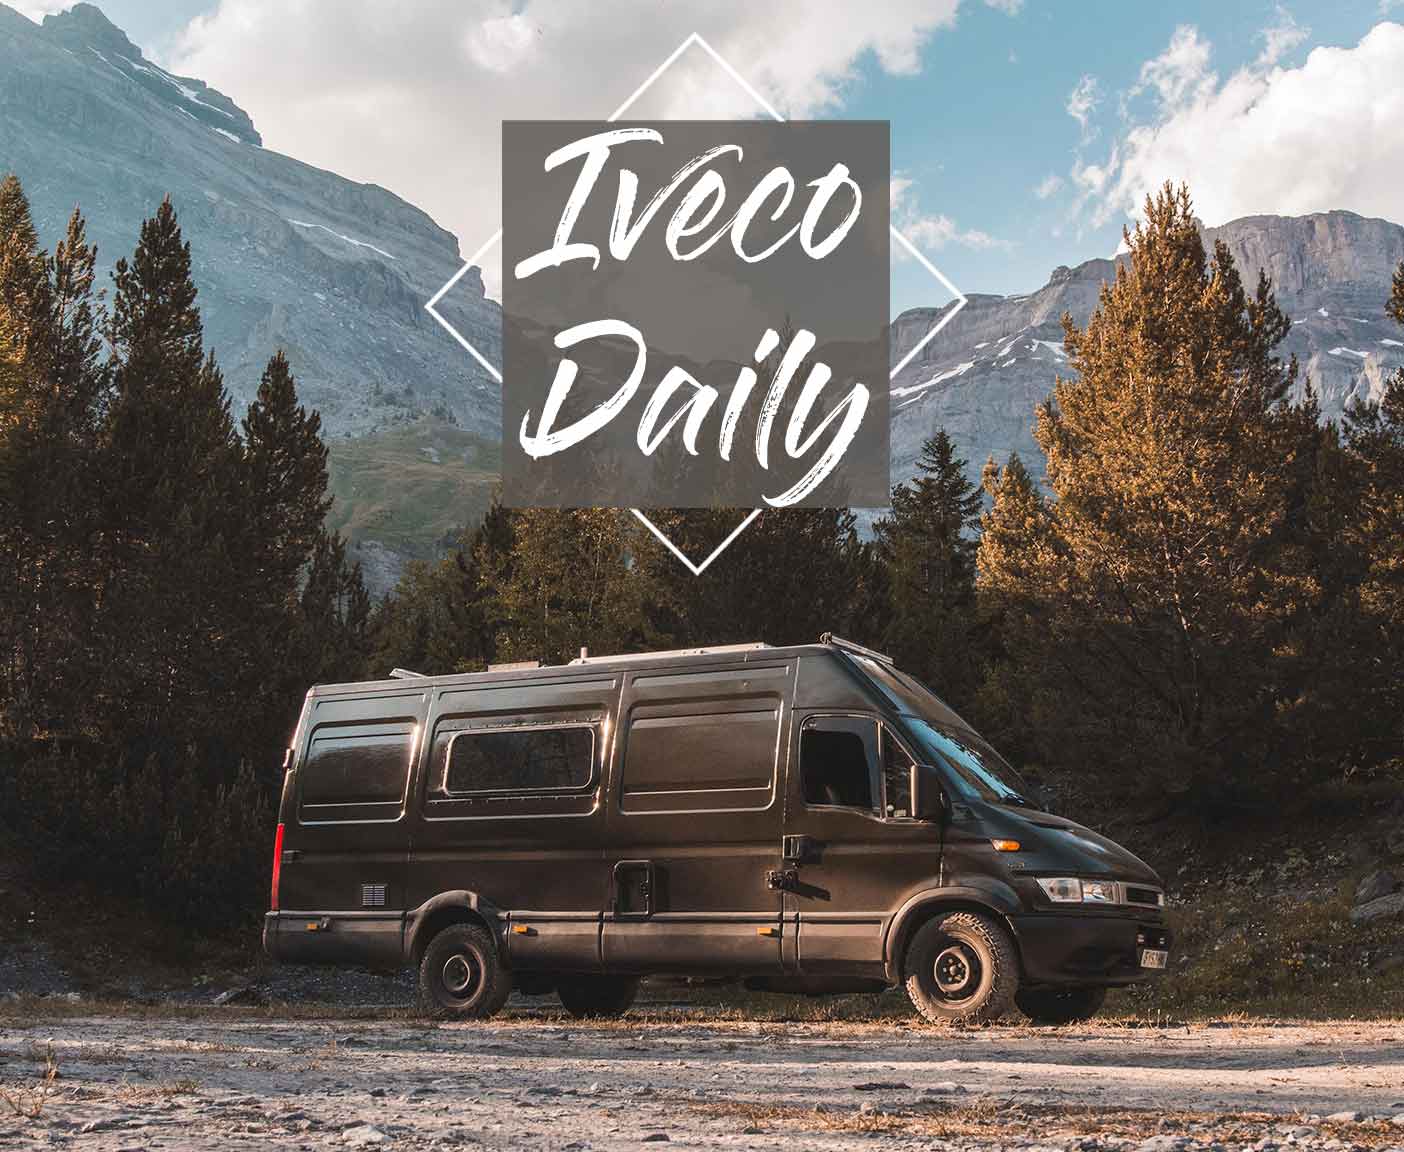 iveco daily camper conversion